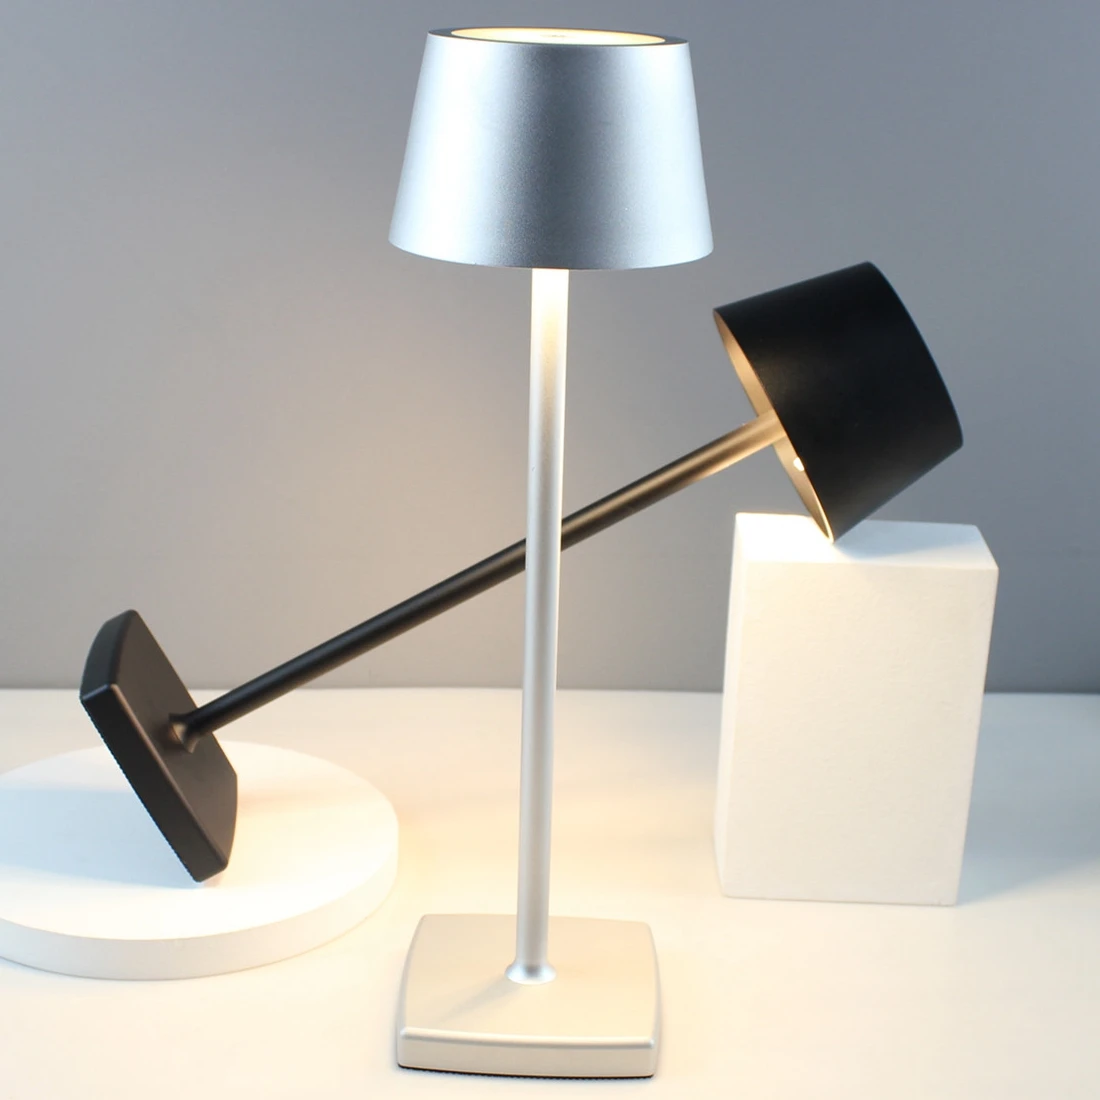 2020 zafferano poldina pro Nordic metal black table lamp decorative living room bed side table lamp cordless